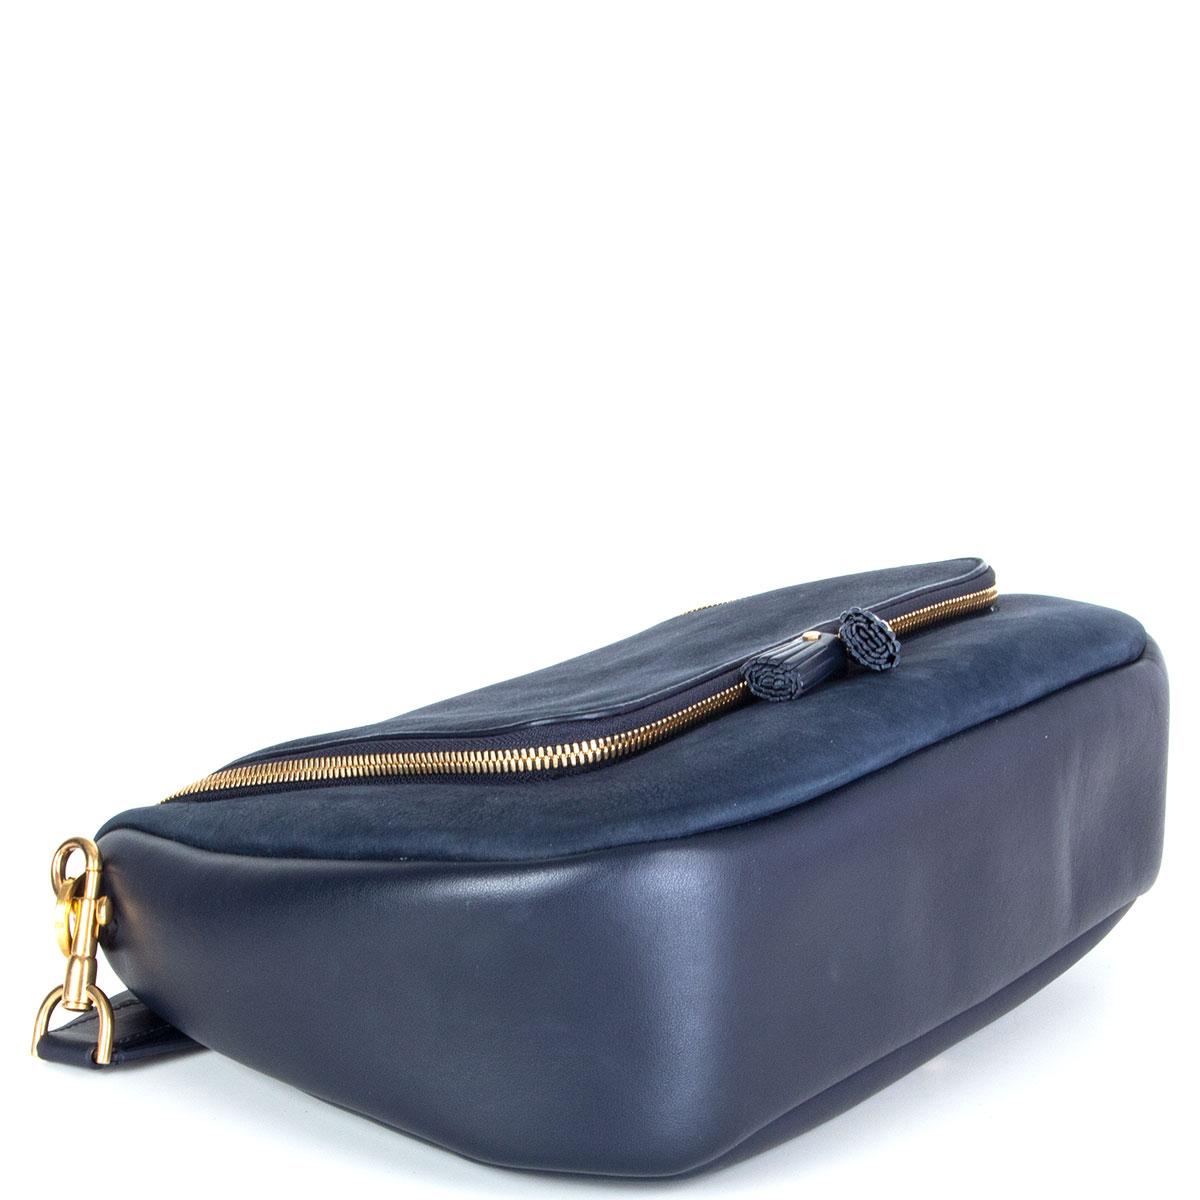 navy blue satchel bag